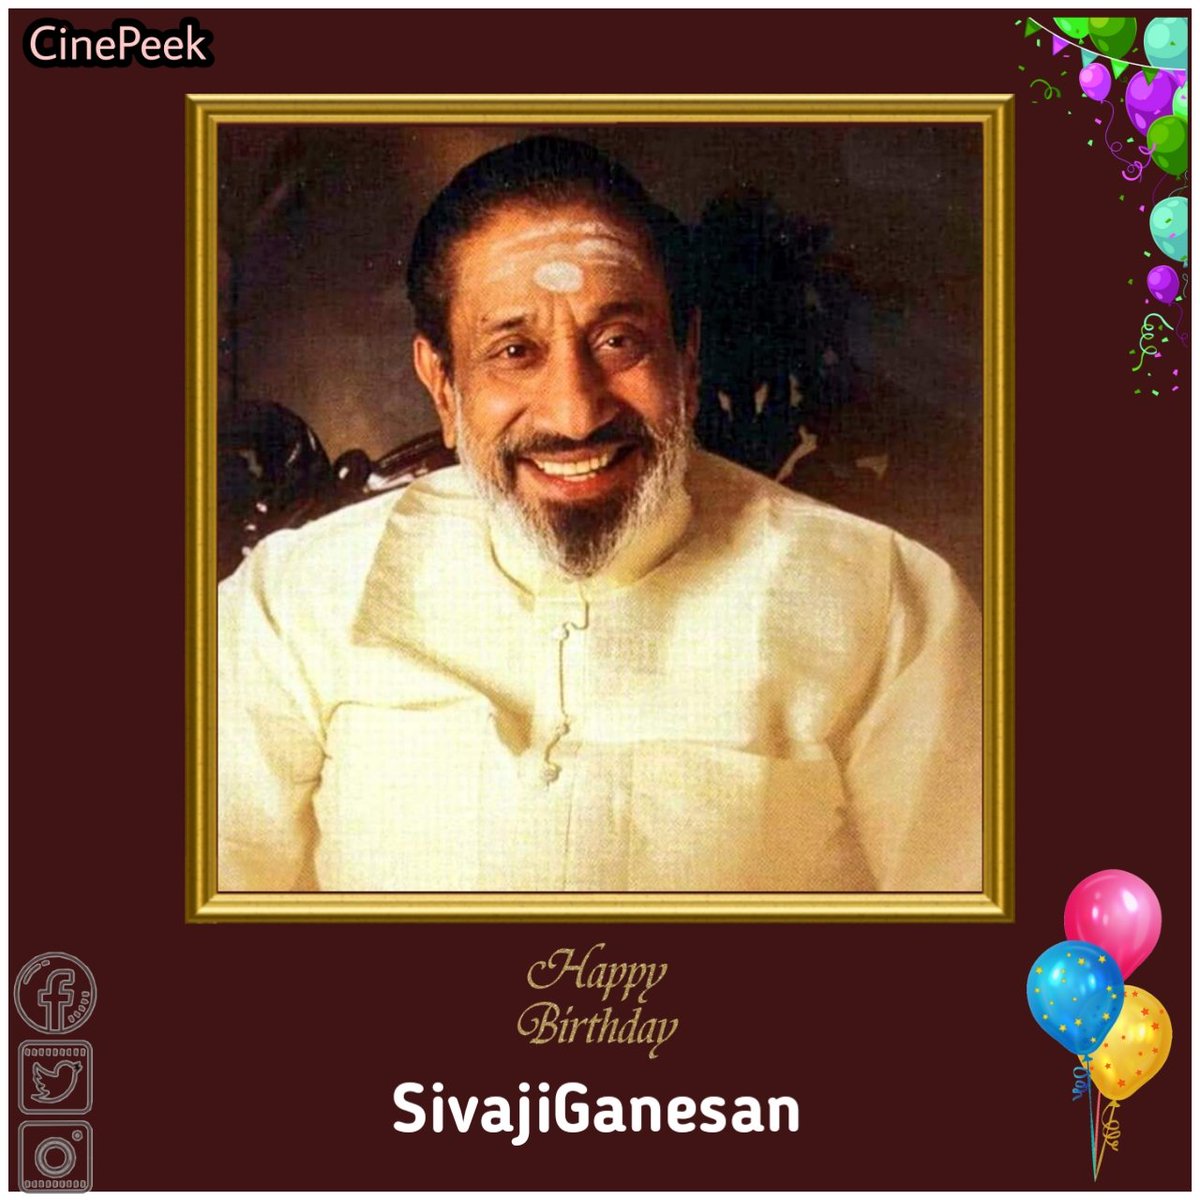 #CinePeek Team Wishing a Happy Birthday To The Legendary Actor #SivajiGanesan Sir 🎂 💐

#HBDSivajiGanesan #HappyBirthdaySivajiGanesan @iamVikramPrabhu @CinePeek